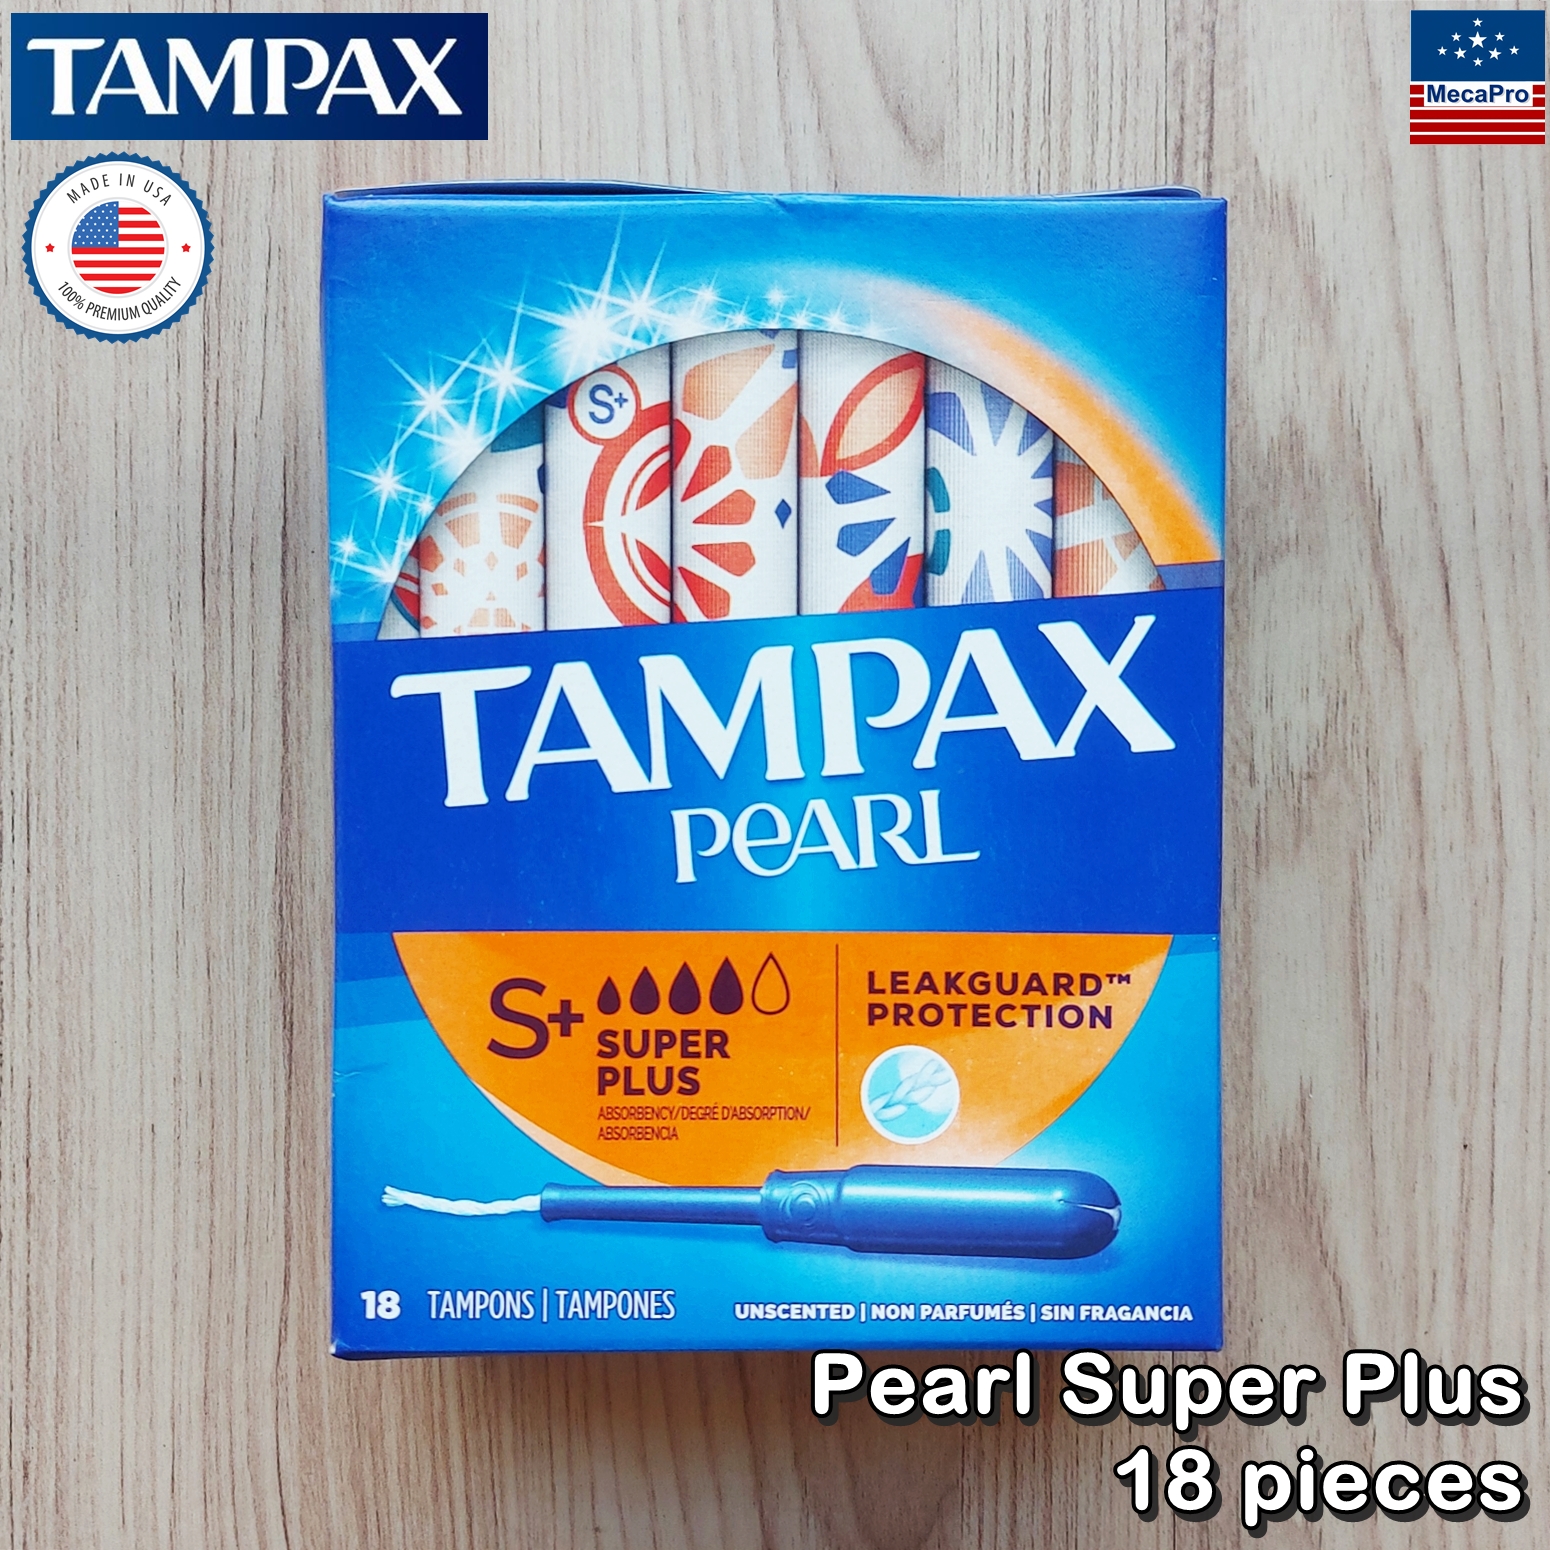 Tampax® Pearl Super Plus Plastic Tampons 18 pieces ผ้าอนามัยแบบสอด 18 ชิ้น (1 กล่อง) เหมาะกับวันมามาก